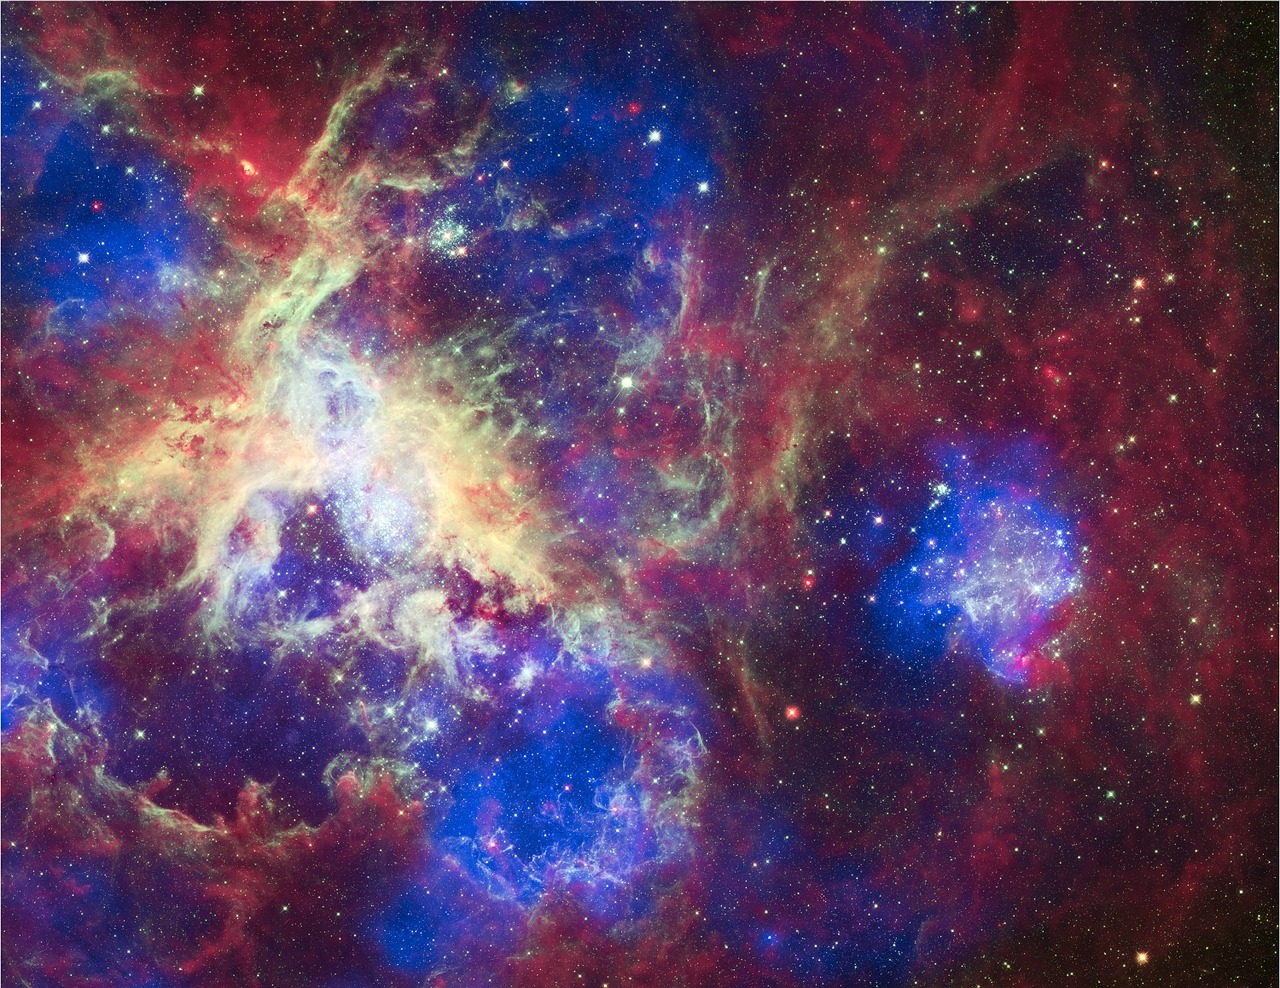 tarantula nebula 30 doradus ngc 2070 free photo